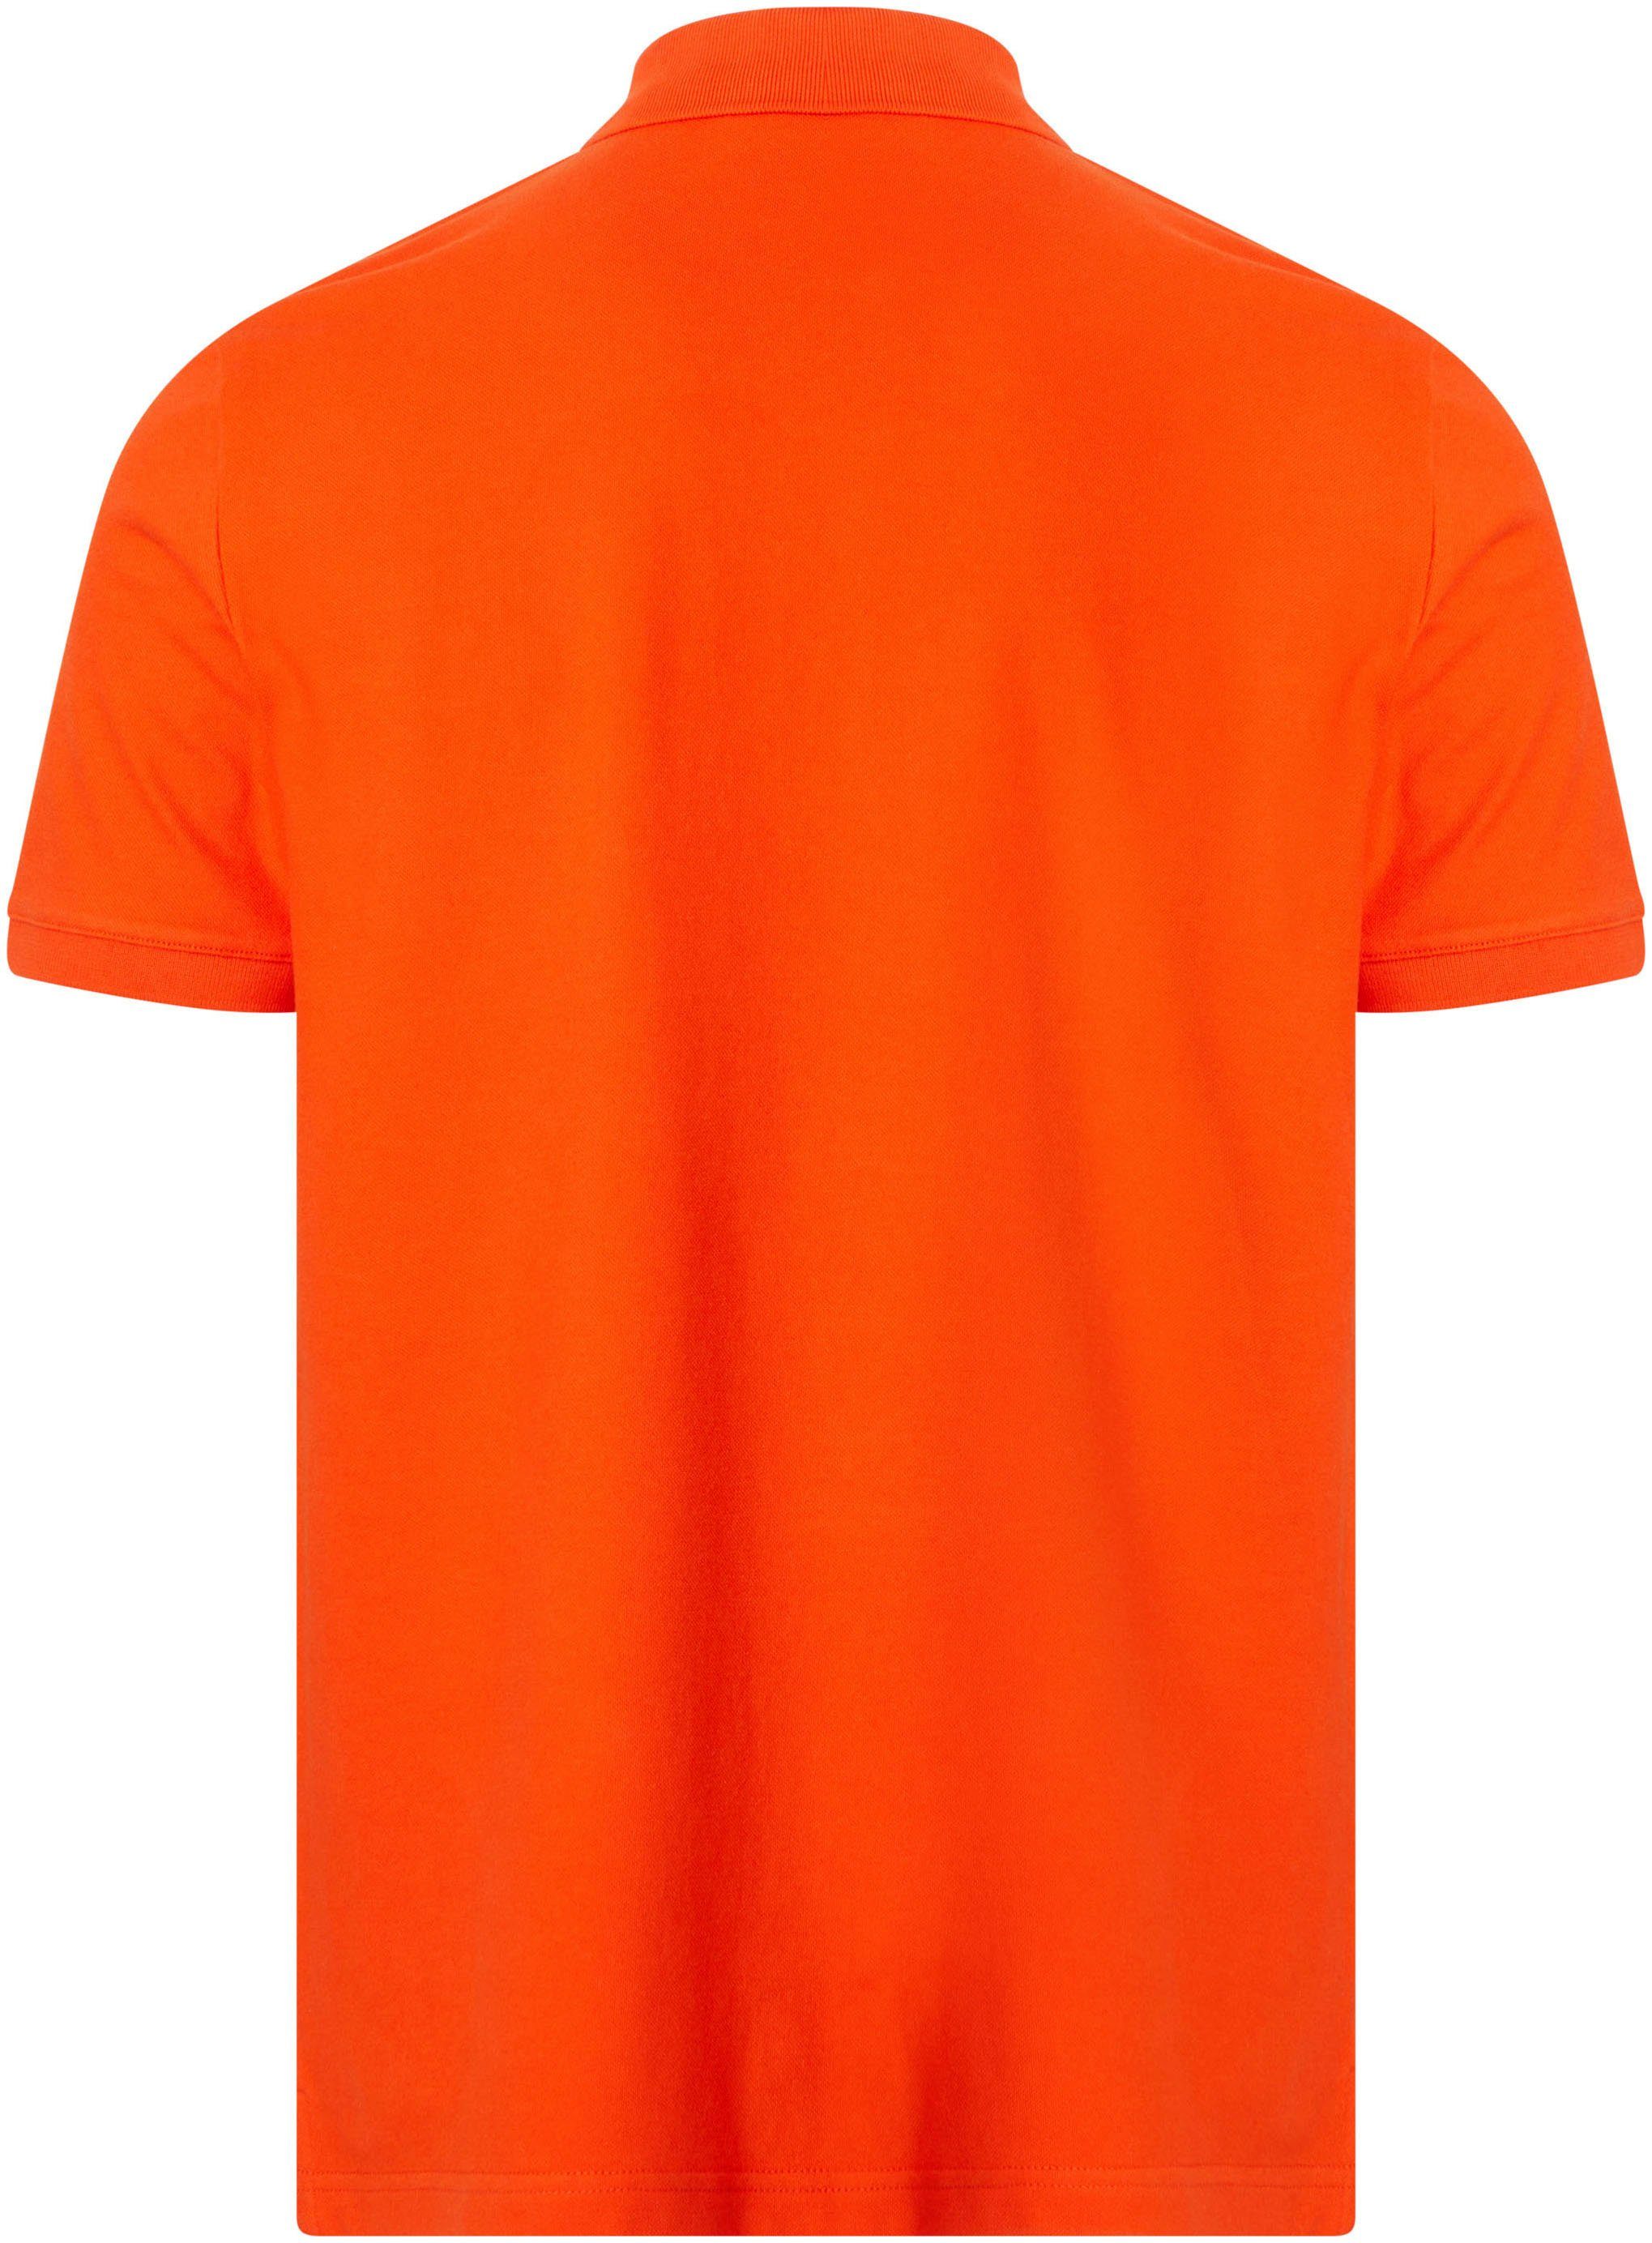 Klein Calvin Big&Tall orange mit Poloshirt Polokragen